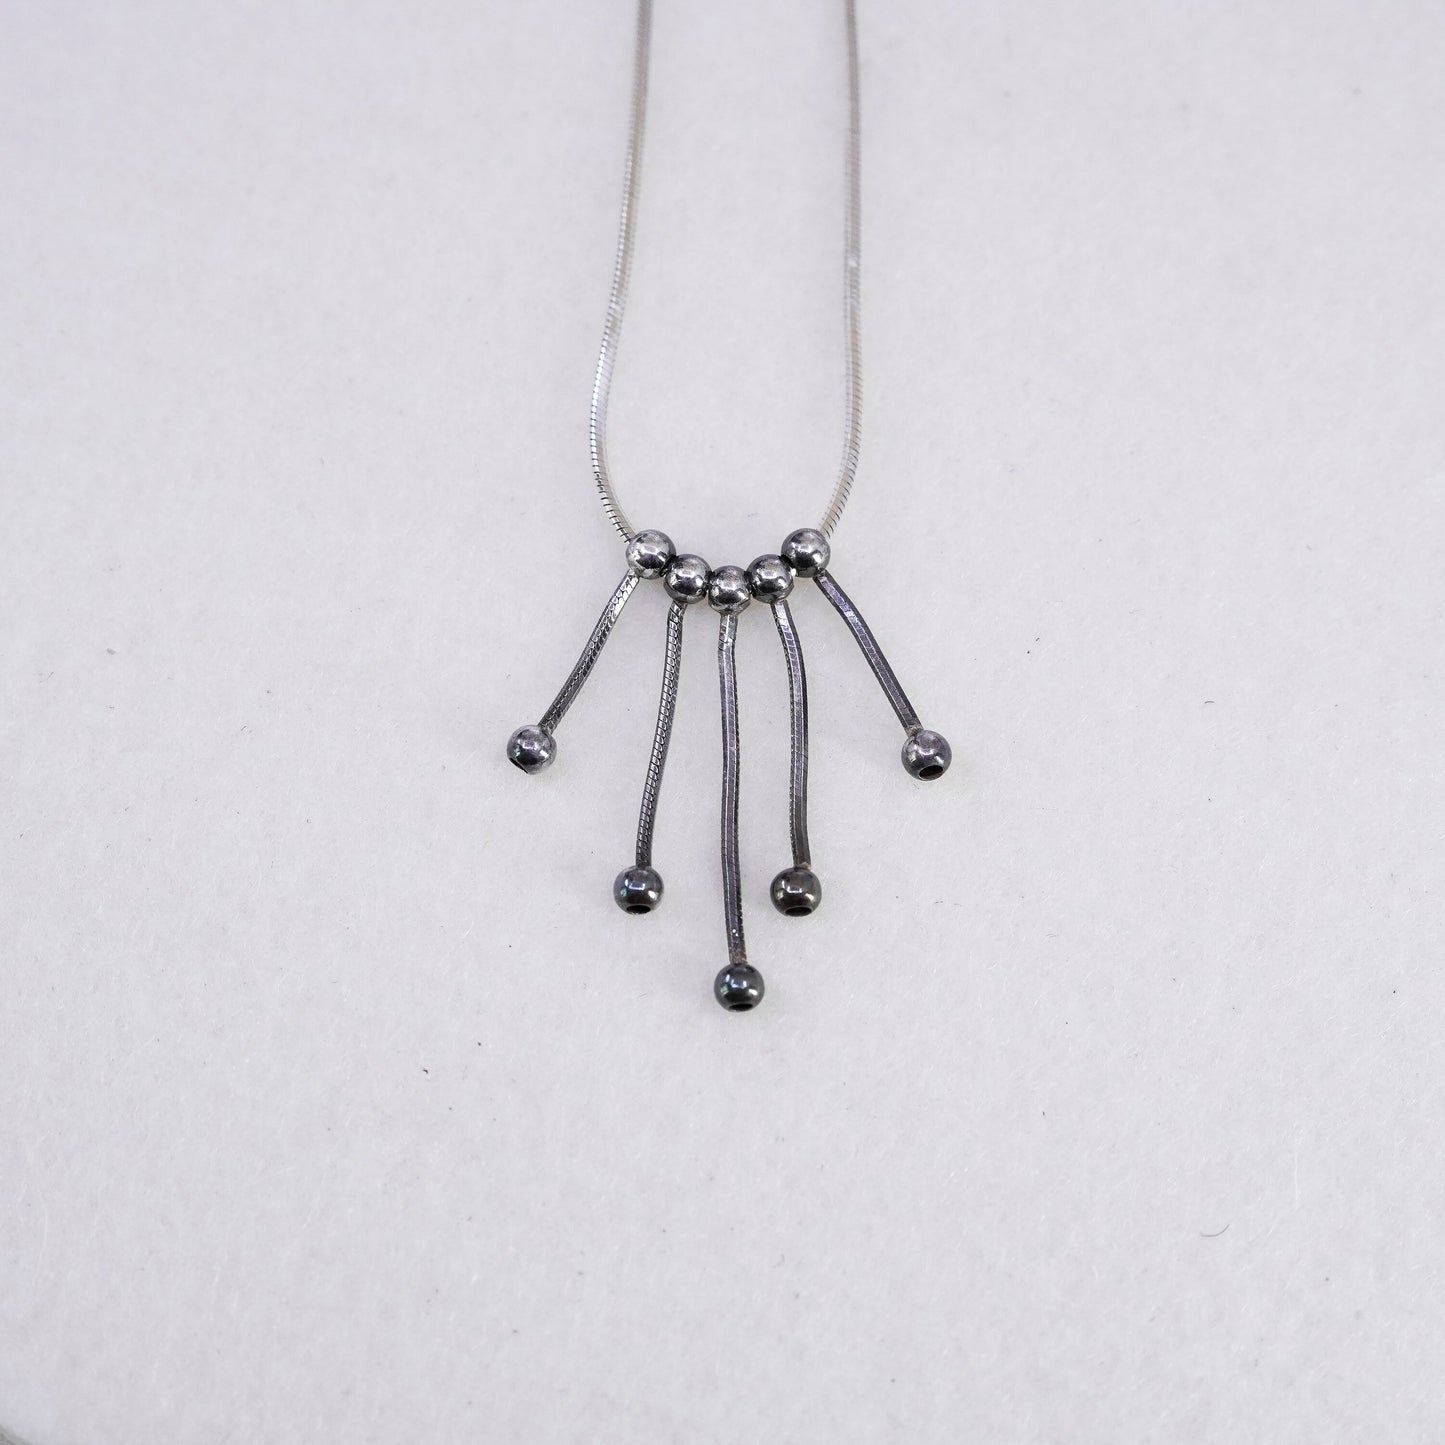 18”, vtg Sterling 925 silver handmade snake necklace with fringe bead pendant